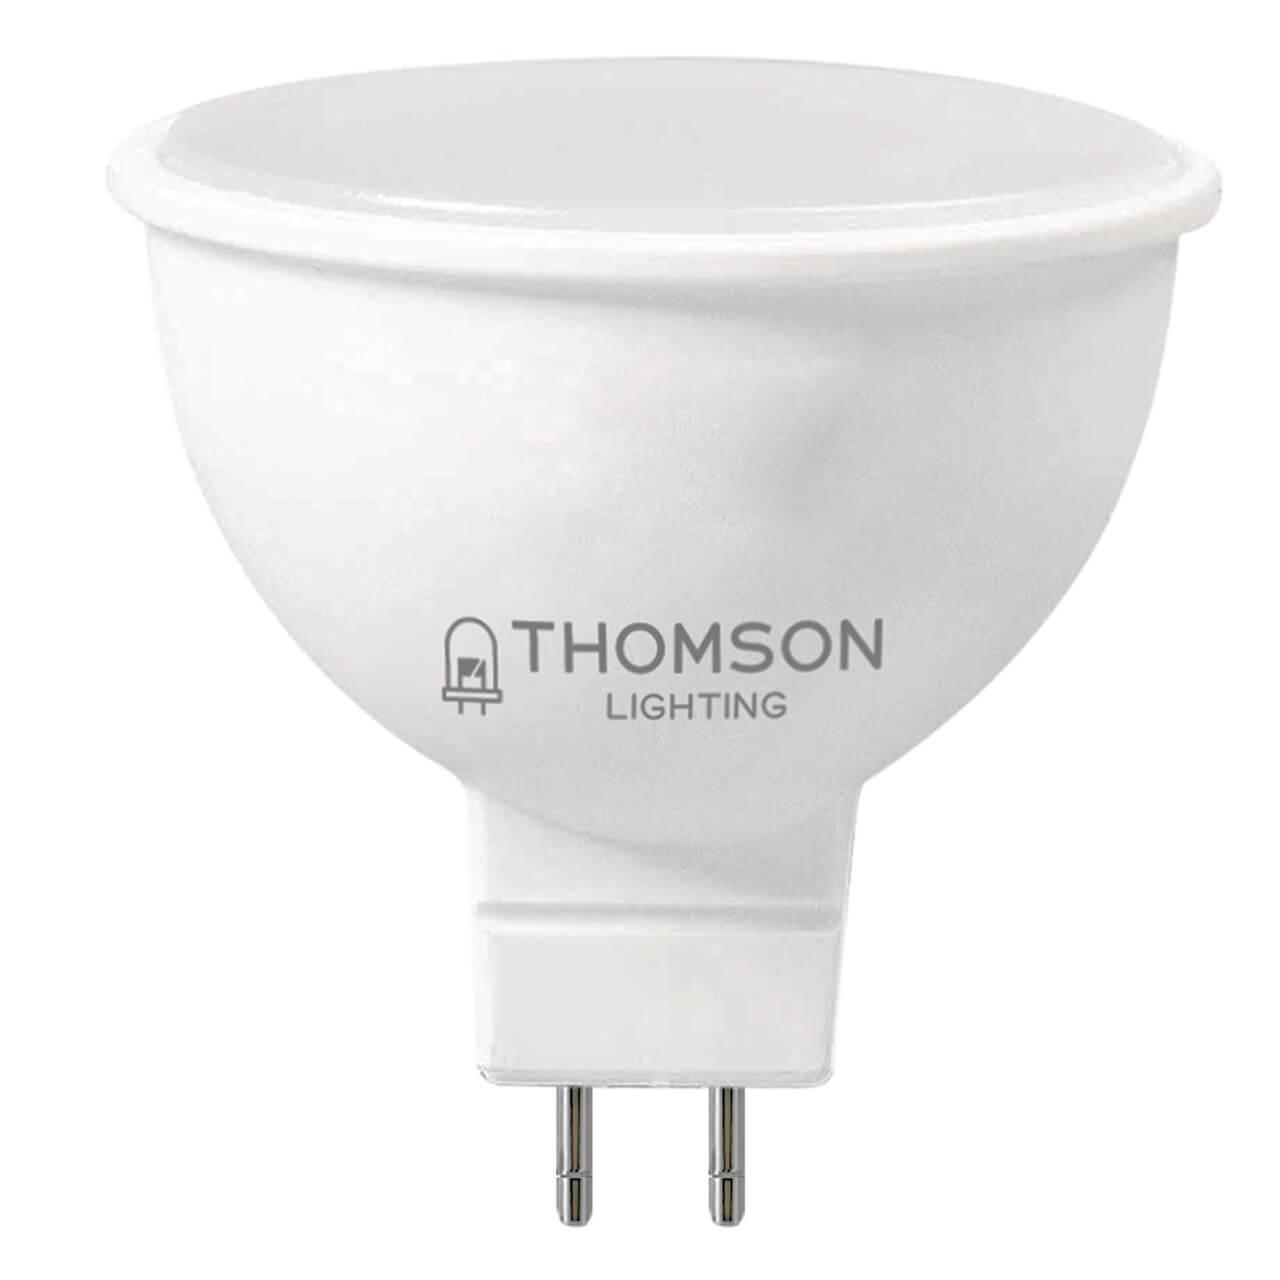 TH-B2323 Лампа светодиодная GU5.3 8W 6500K полусфера матовая Thomson